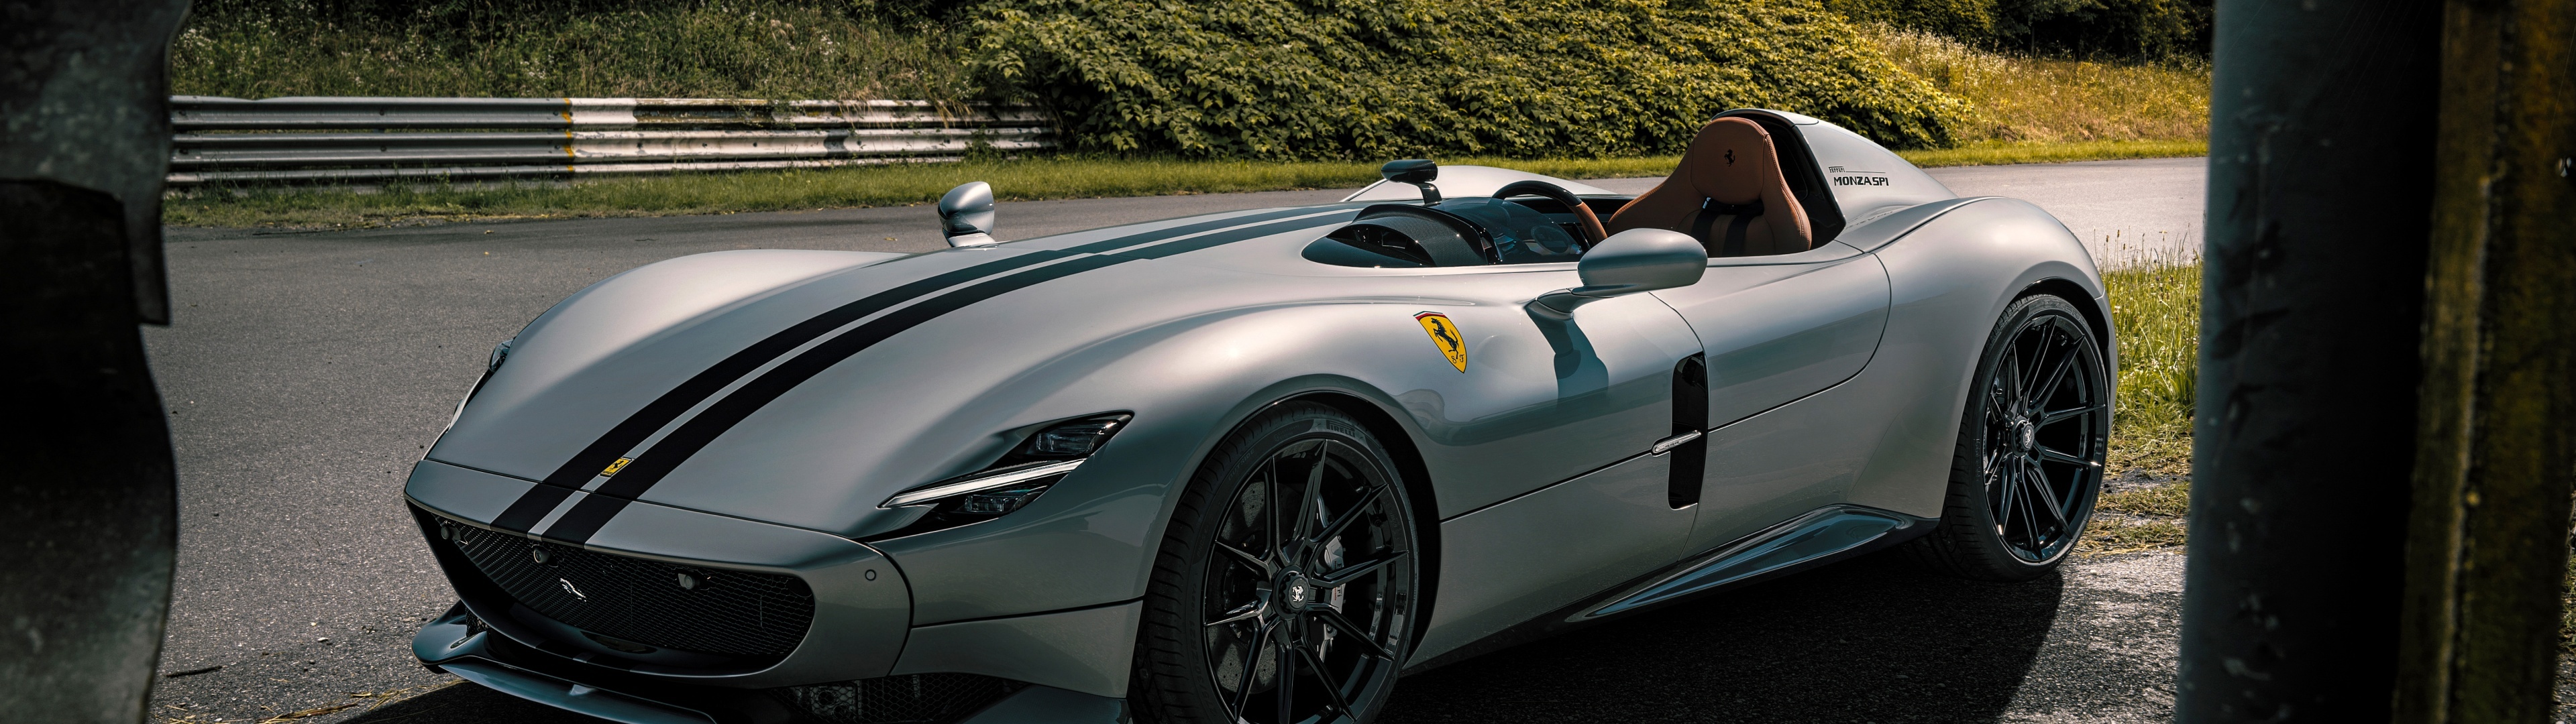 Ferrari Monza, Auto perfection, Performance-driven, Awe-inspiring power, 3840x1080 Dual Screen Desktop